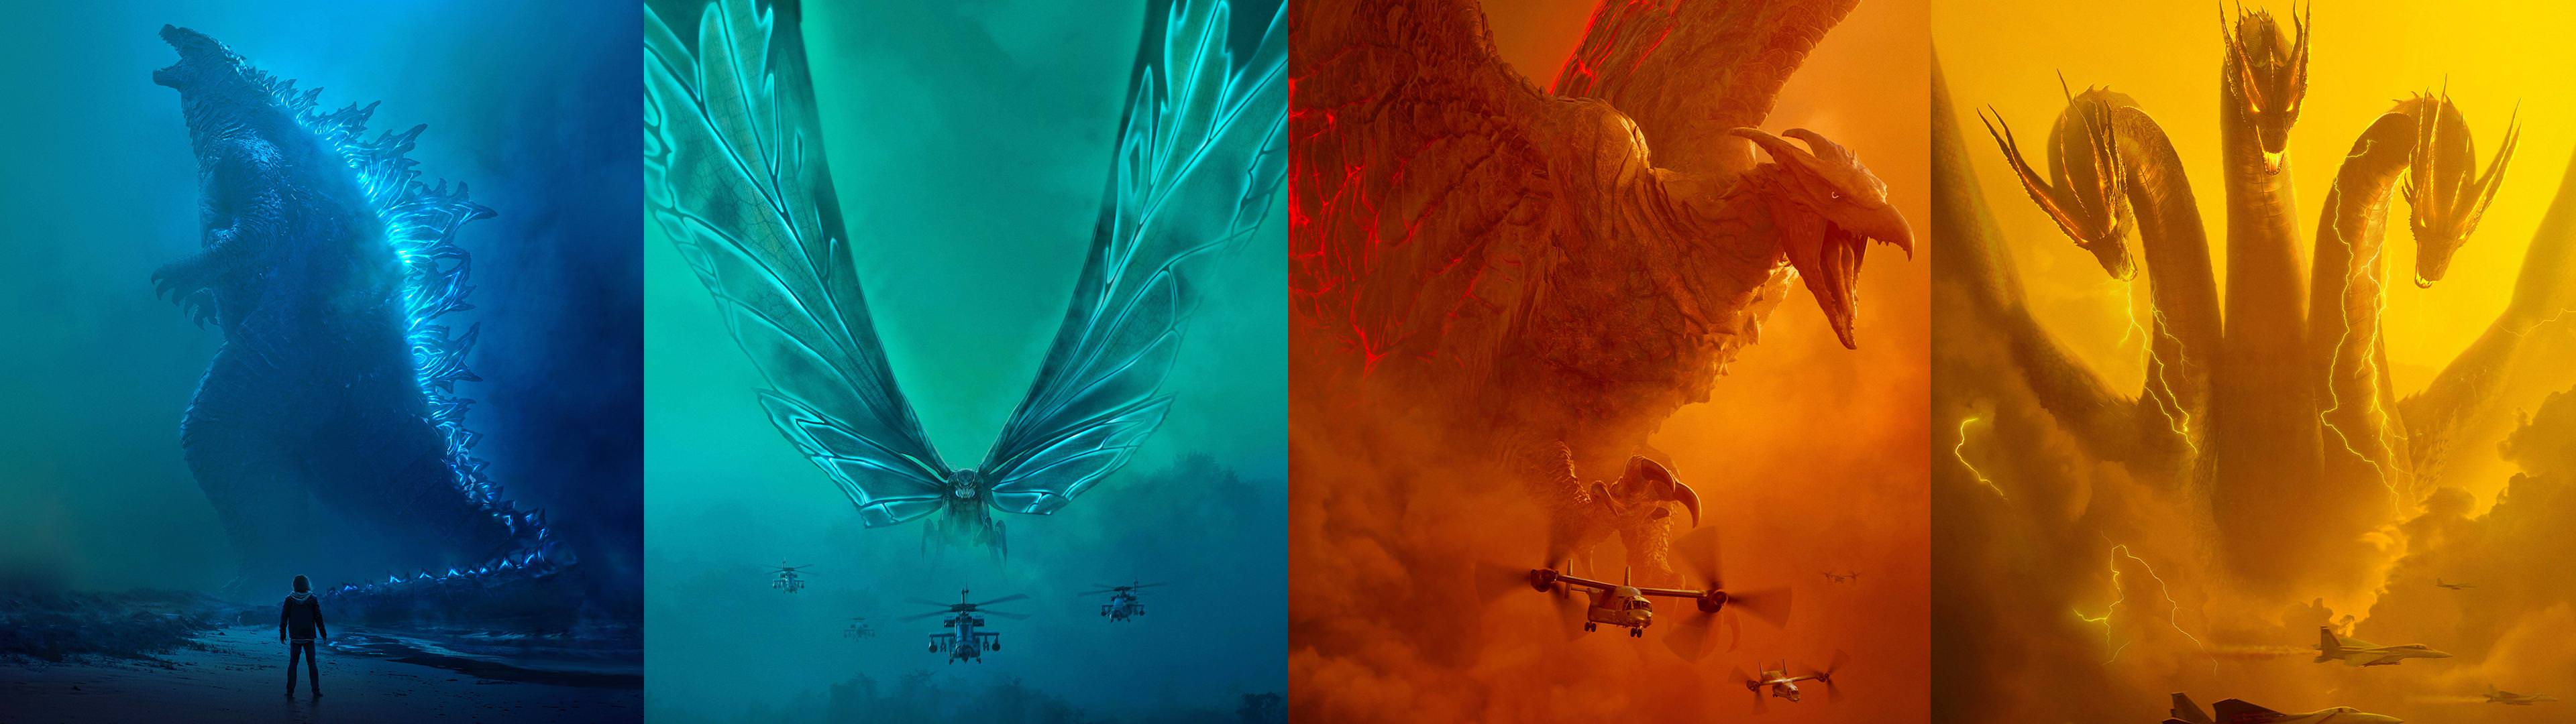 Dual Monitor Version Of The Godzilla Poster Wallpaper